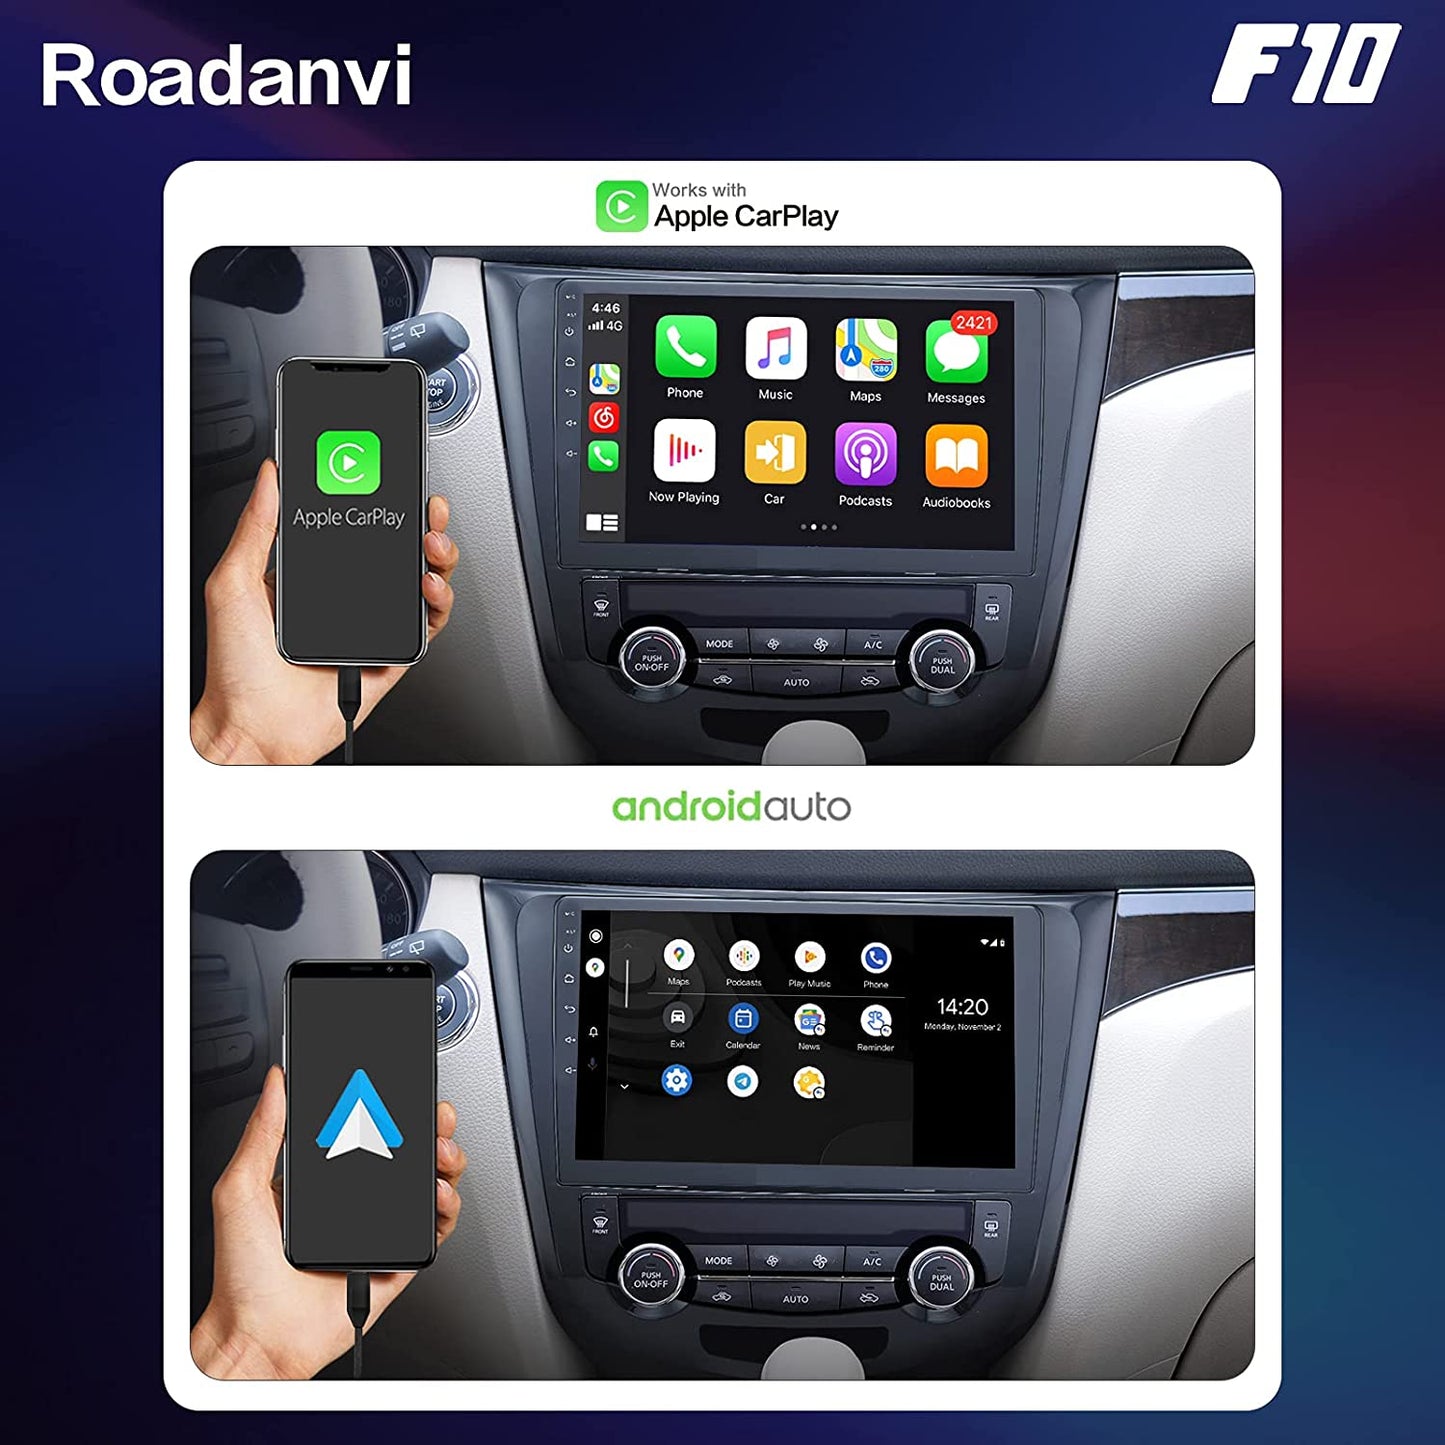 Roadanvi for Nissan X-Trail Rogue 2014 2015 2016 2017 2018 Car Stereo Radio Carplay Andorid Auto Bluetooth 5.0 4GB RAM 64GB ROM 10.2 Inch Touch Screen 1280x720 GPS Car Navigation